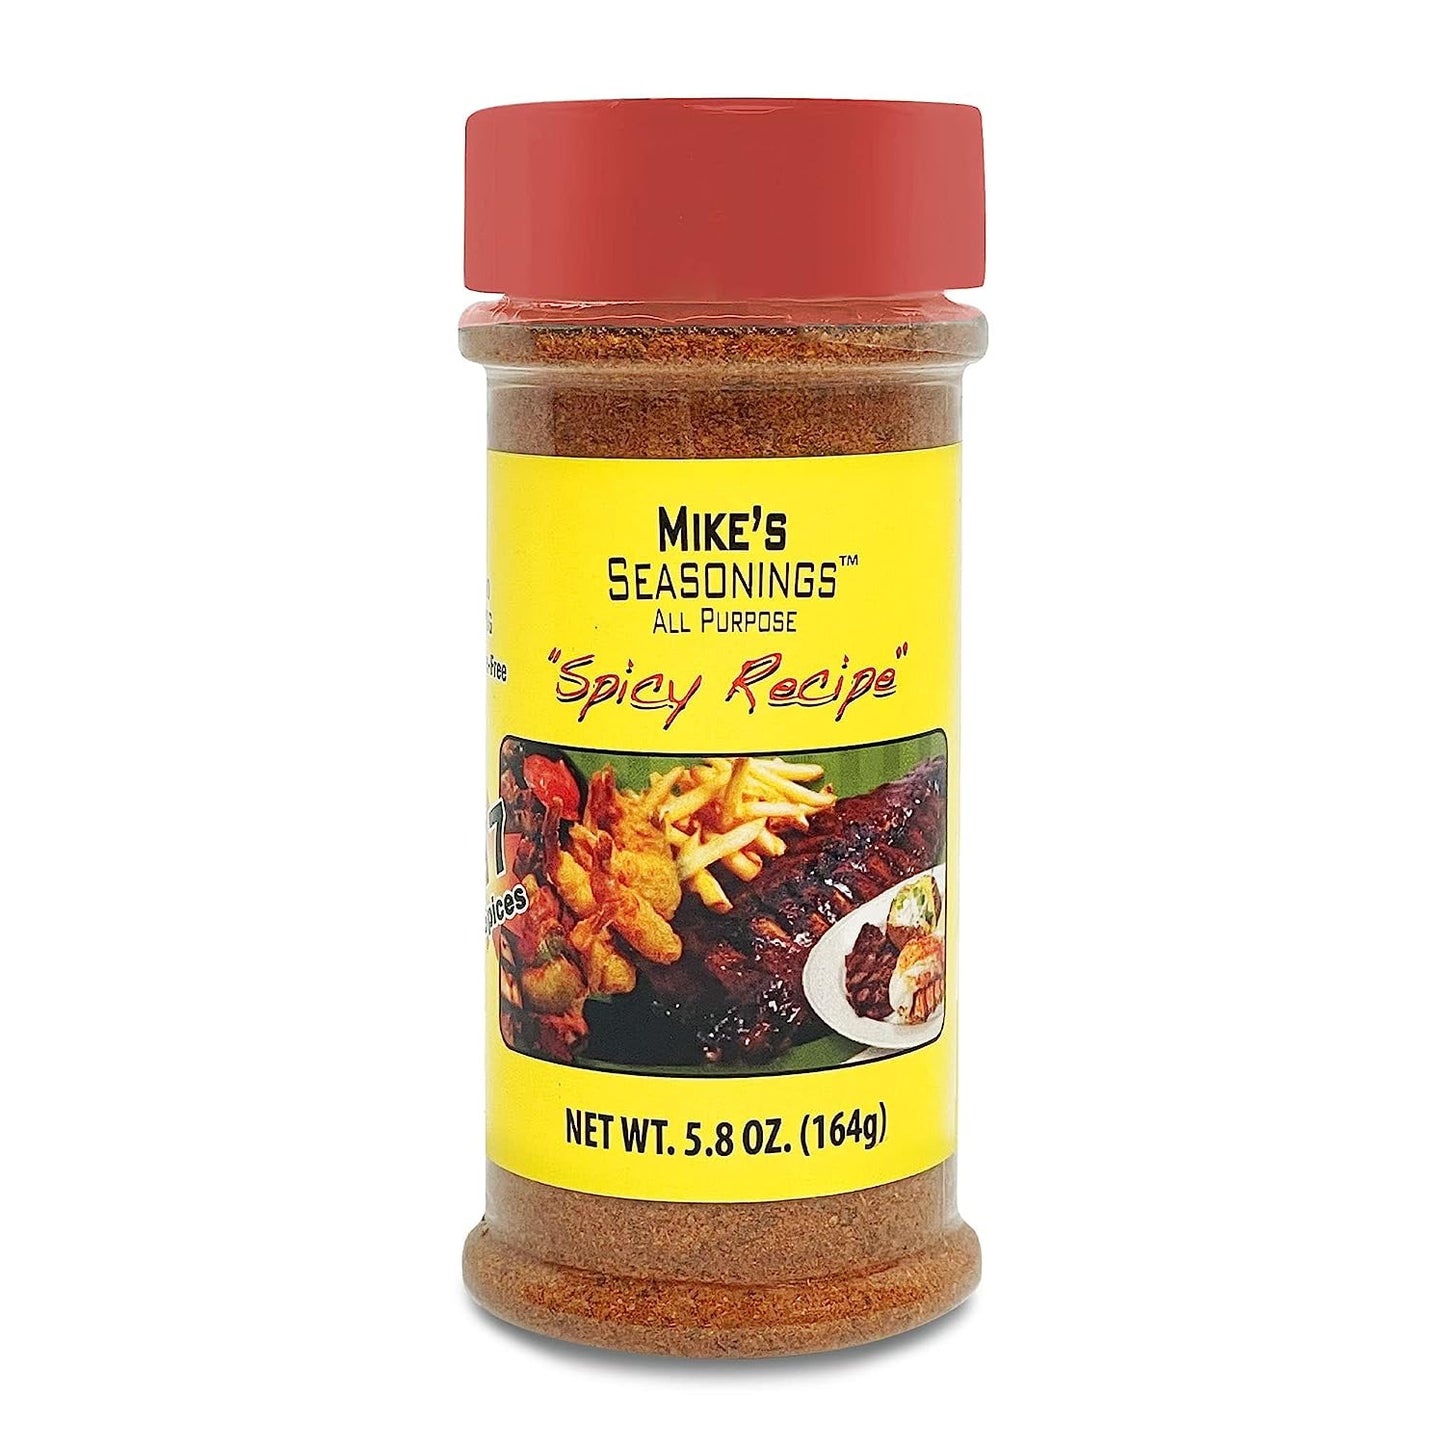 "Spicy Recipe" 5.8 oz.